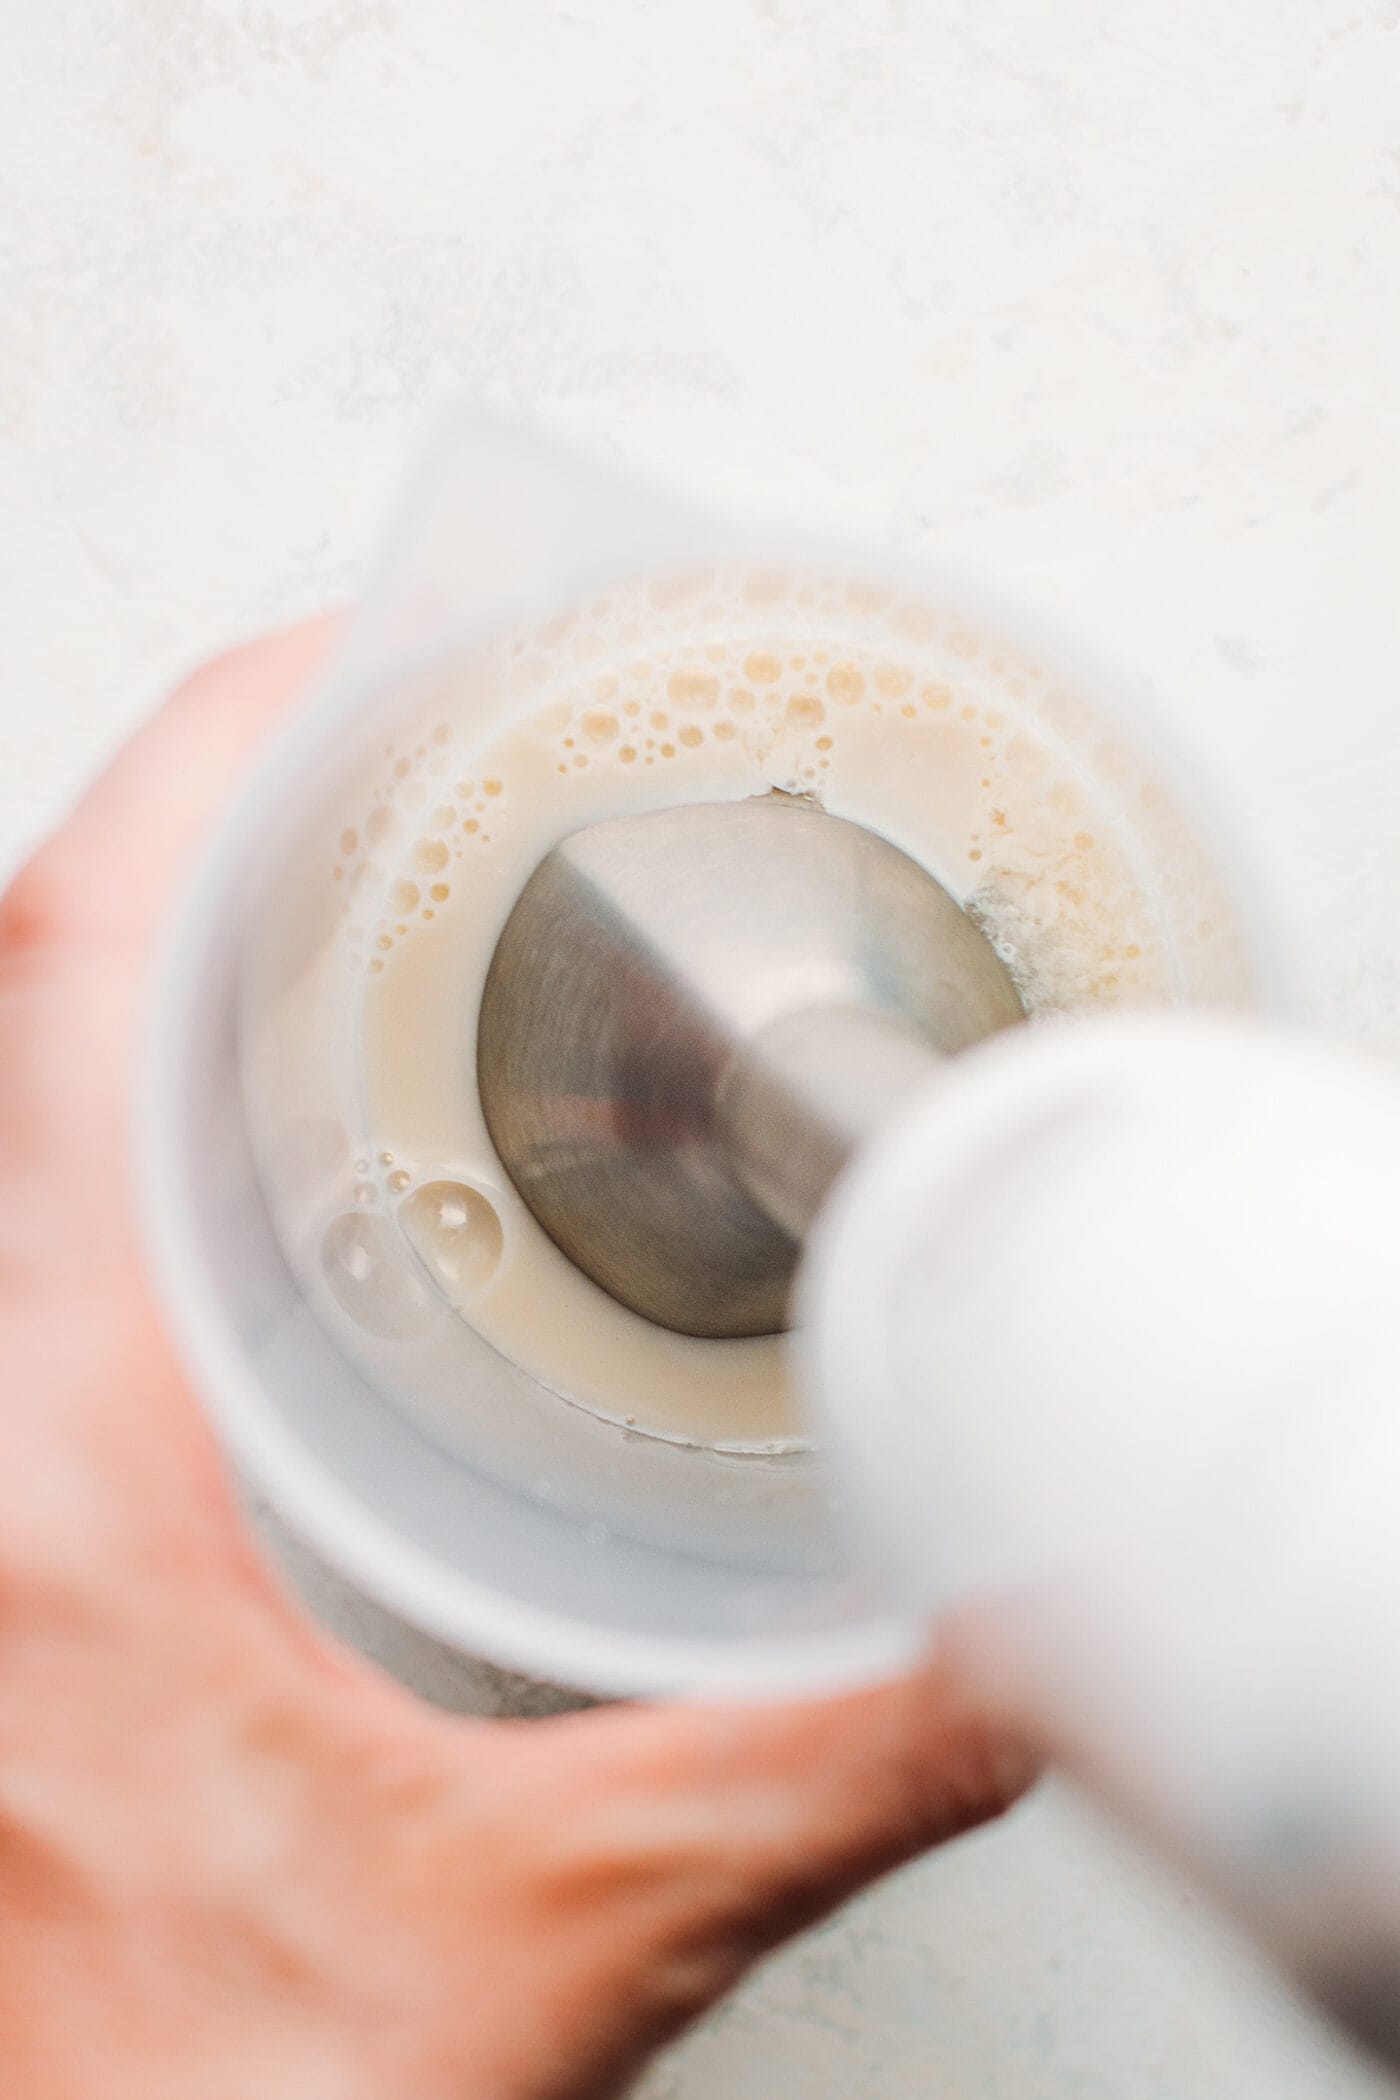 Blending soy milk with an immersion blender.